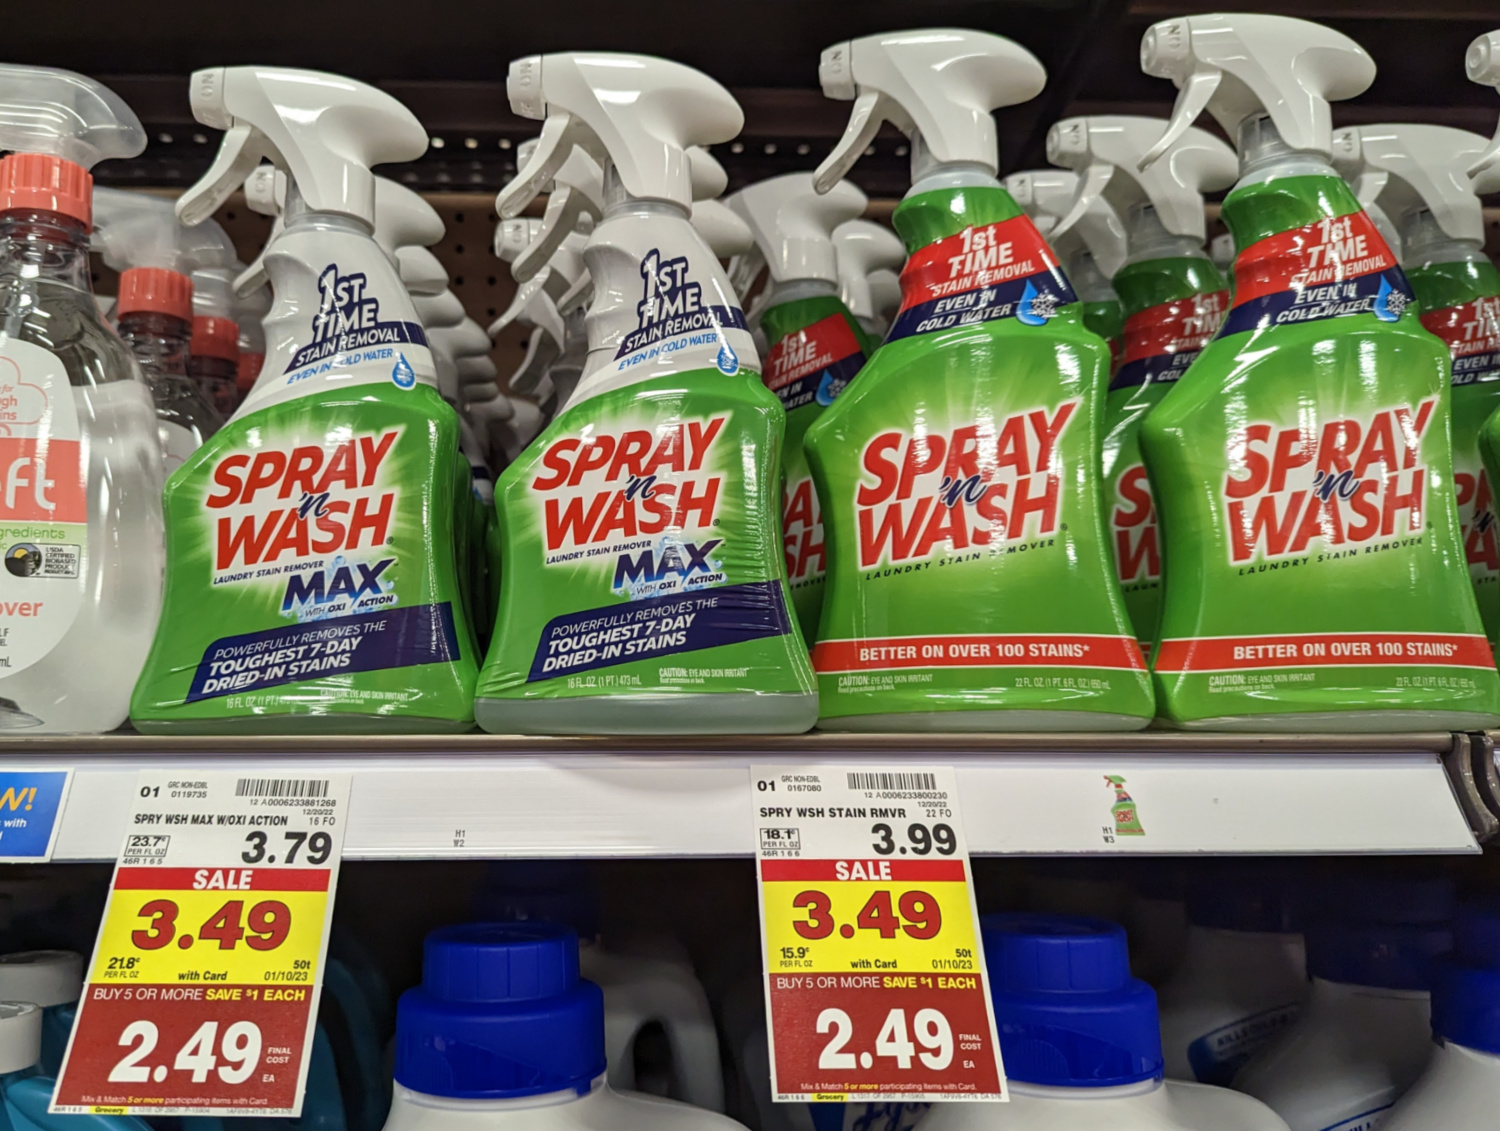 Spray n' Wash Laundry Stain Remover, 22 fl oz